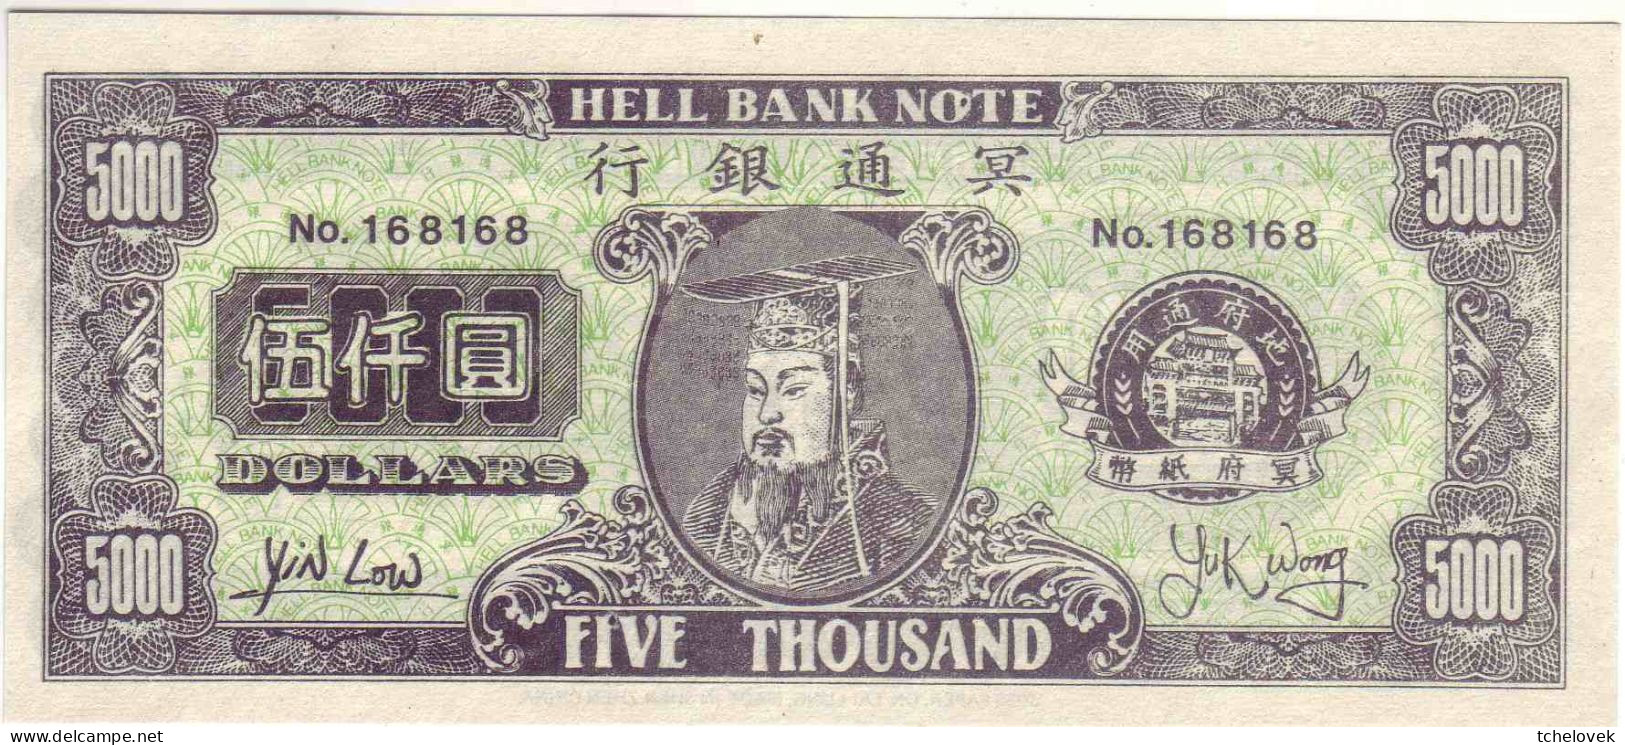 (Billets). Billet Funeraire De 5 000 Dollars Sur Le Modele Des Dollars Hell Bank X3 - China